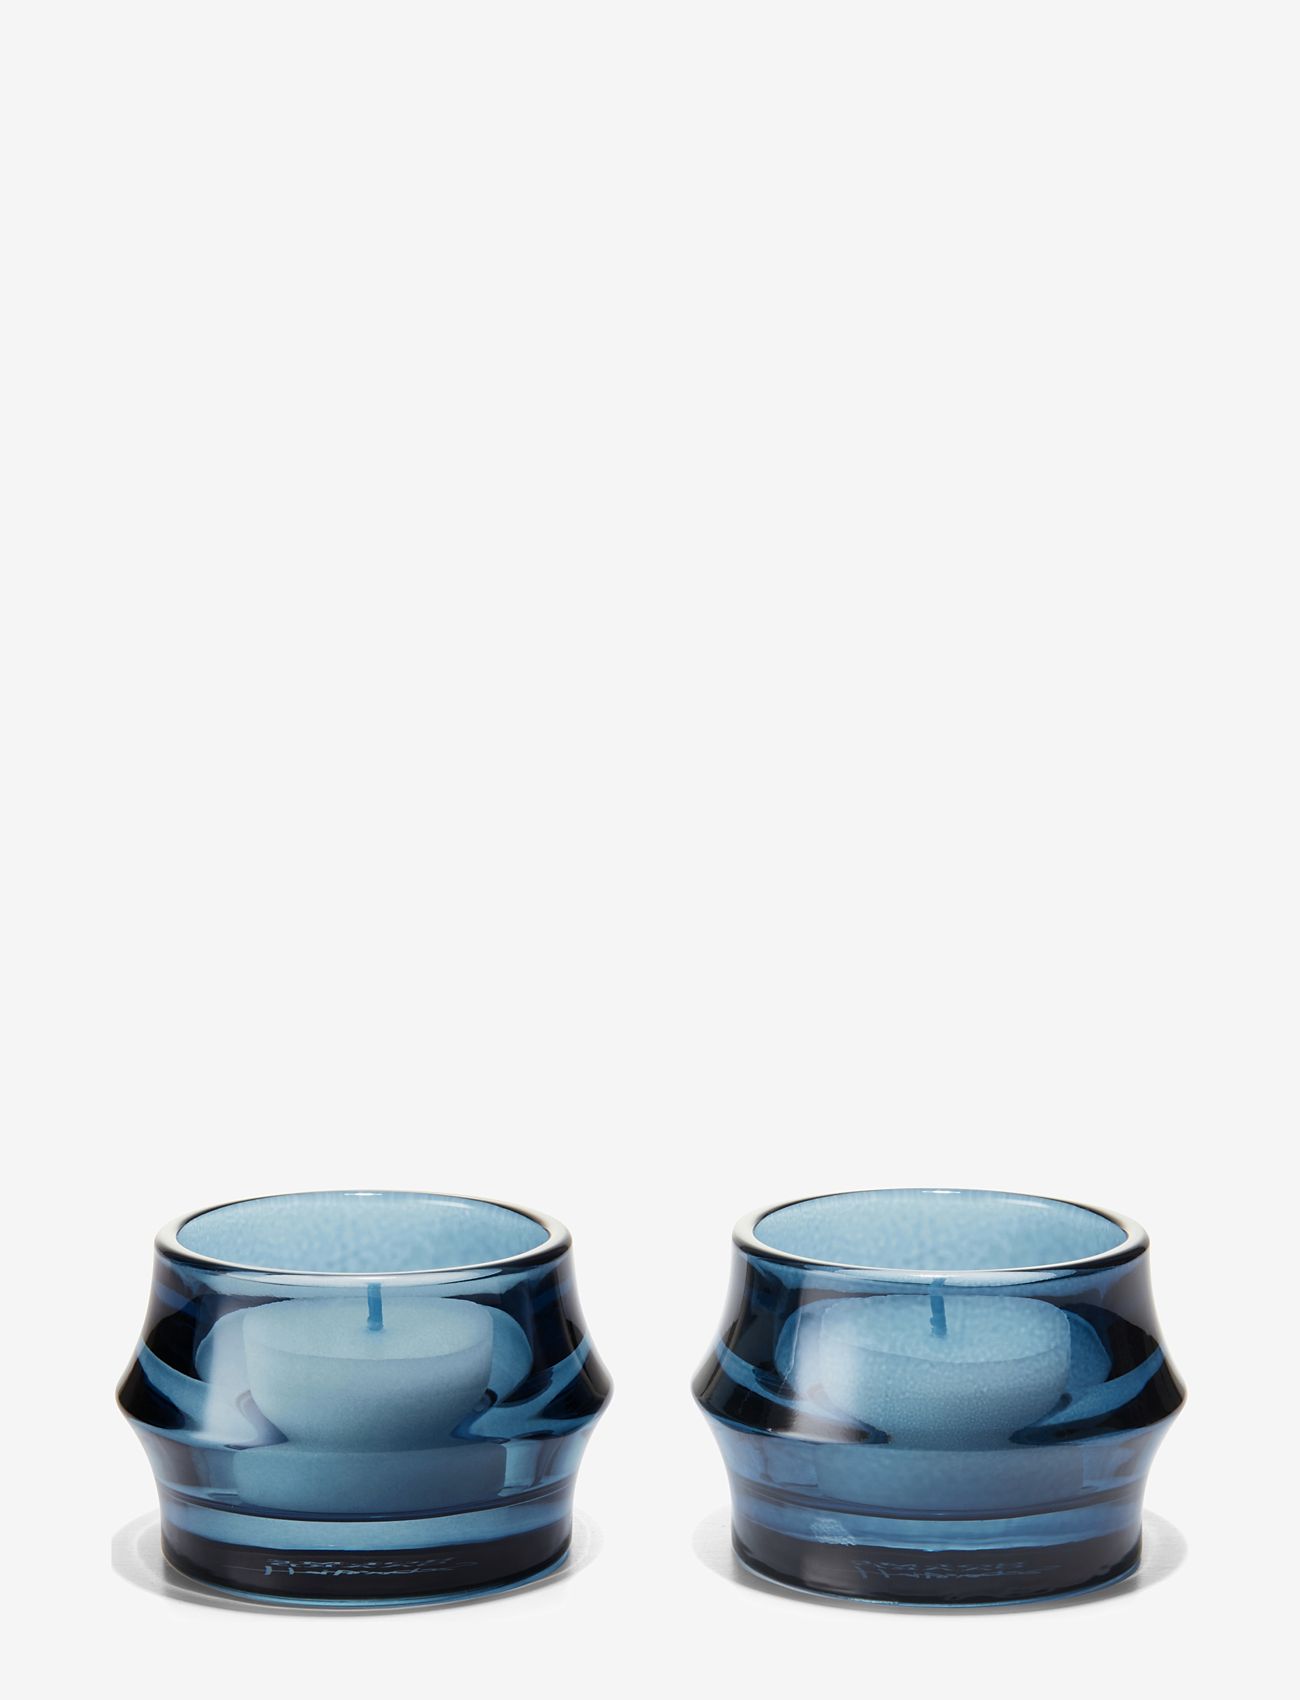 Holmegaard - ARC Tealight holder Ø7.2 cm dark blue 2 pcs. - teeküünlahoidjad - dark blue - 1